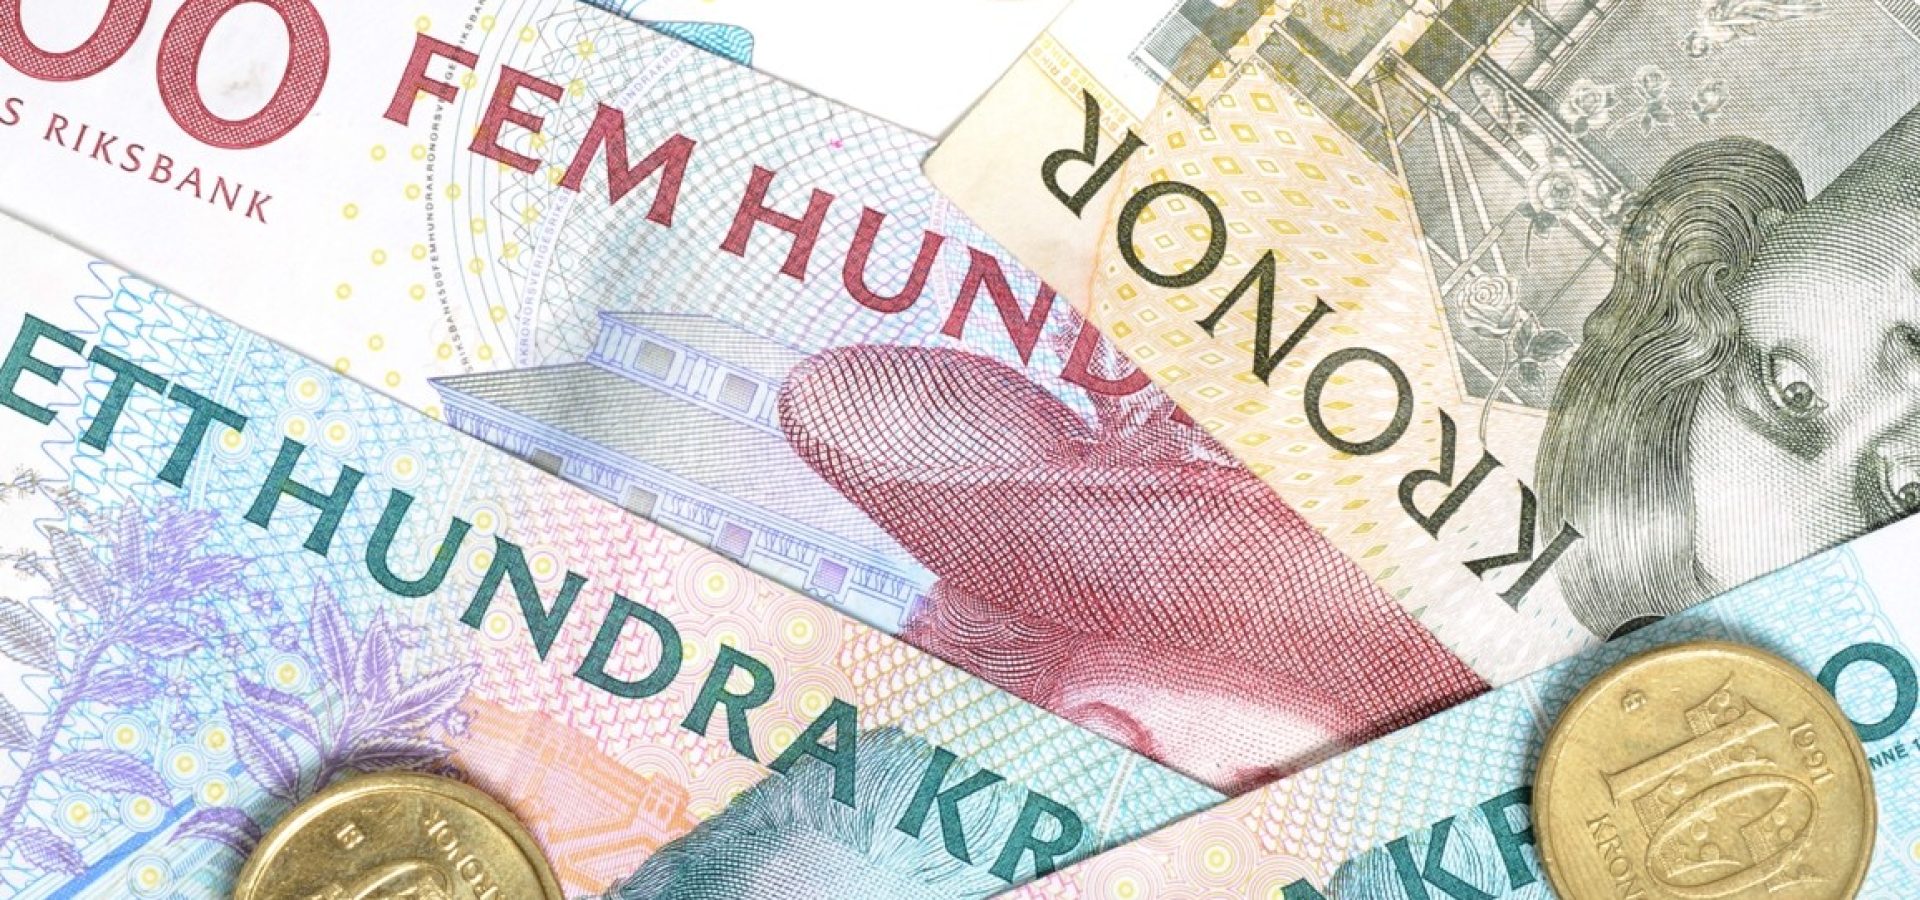 Canadian dollar fell along with Norwegian krone.